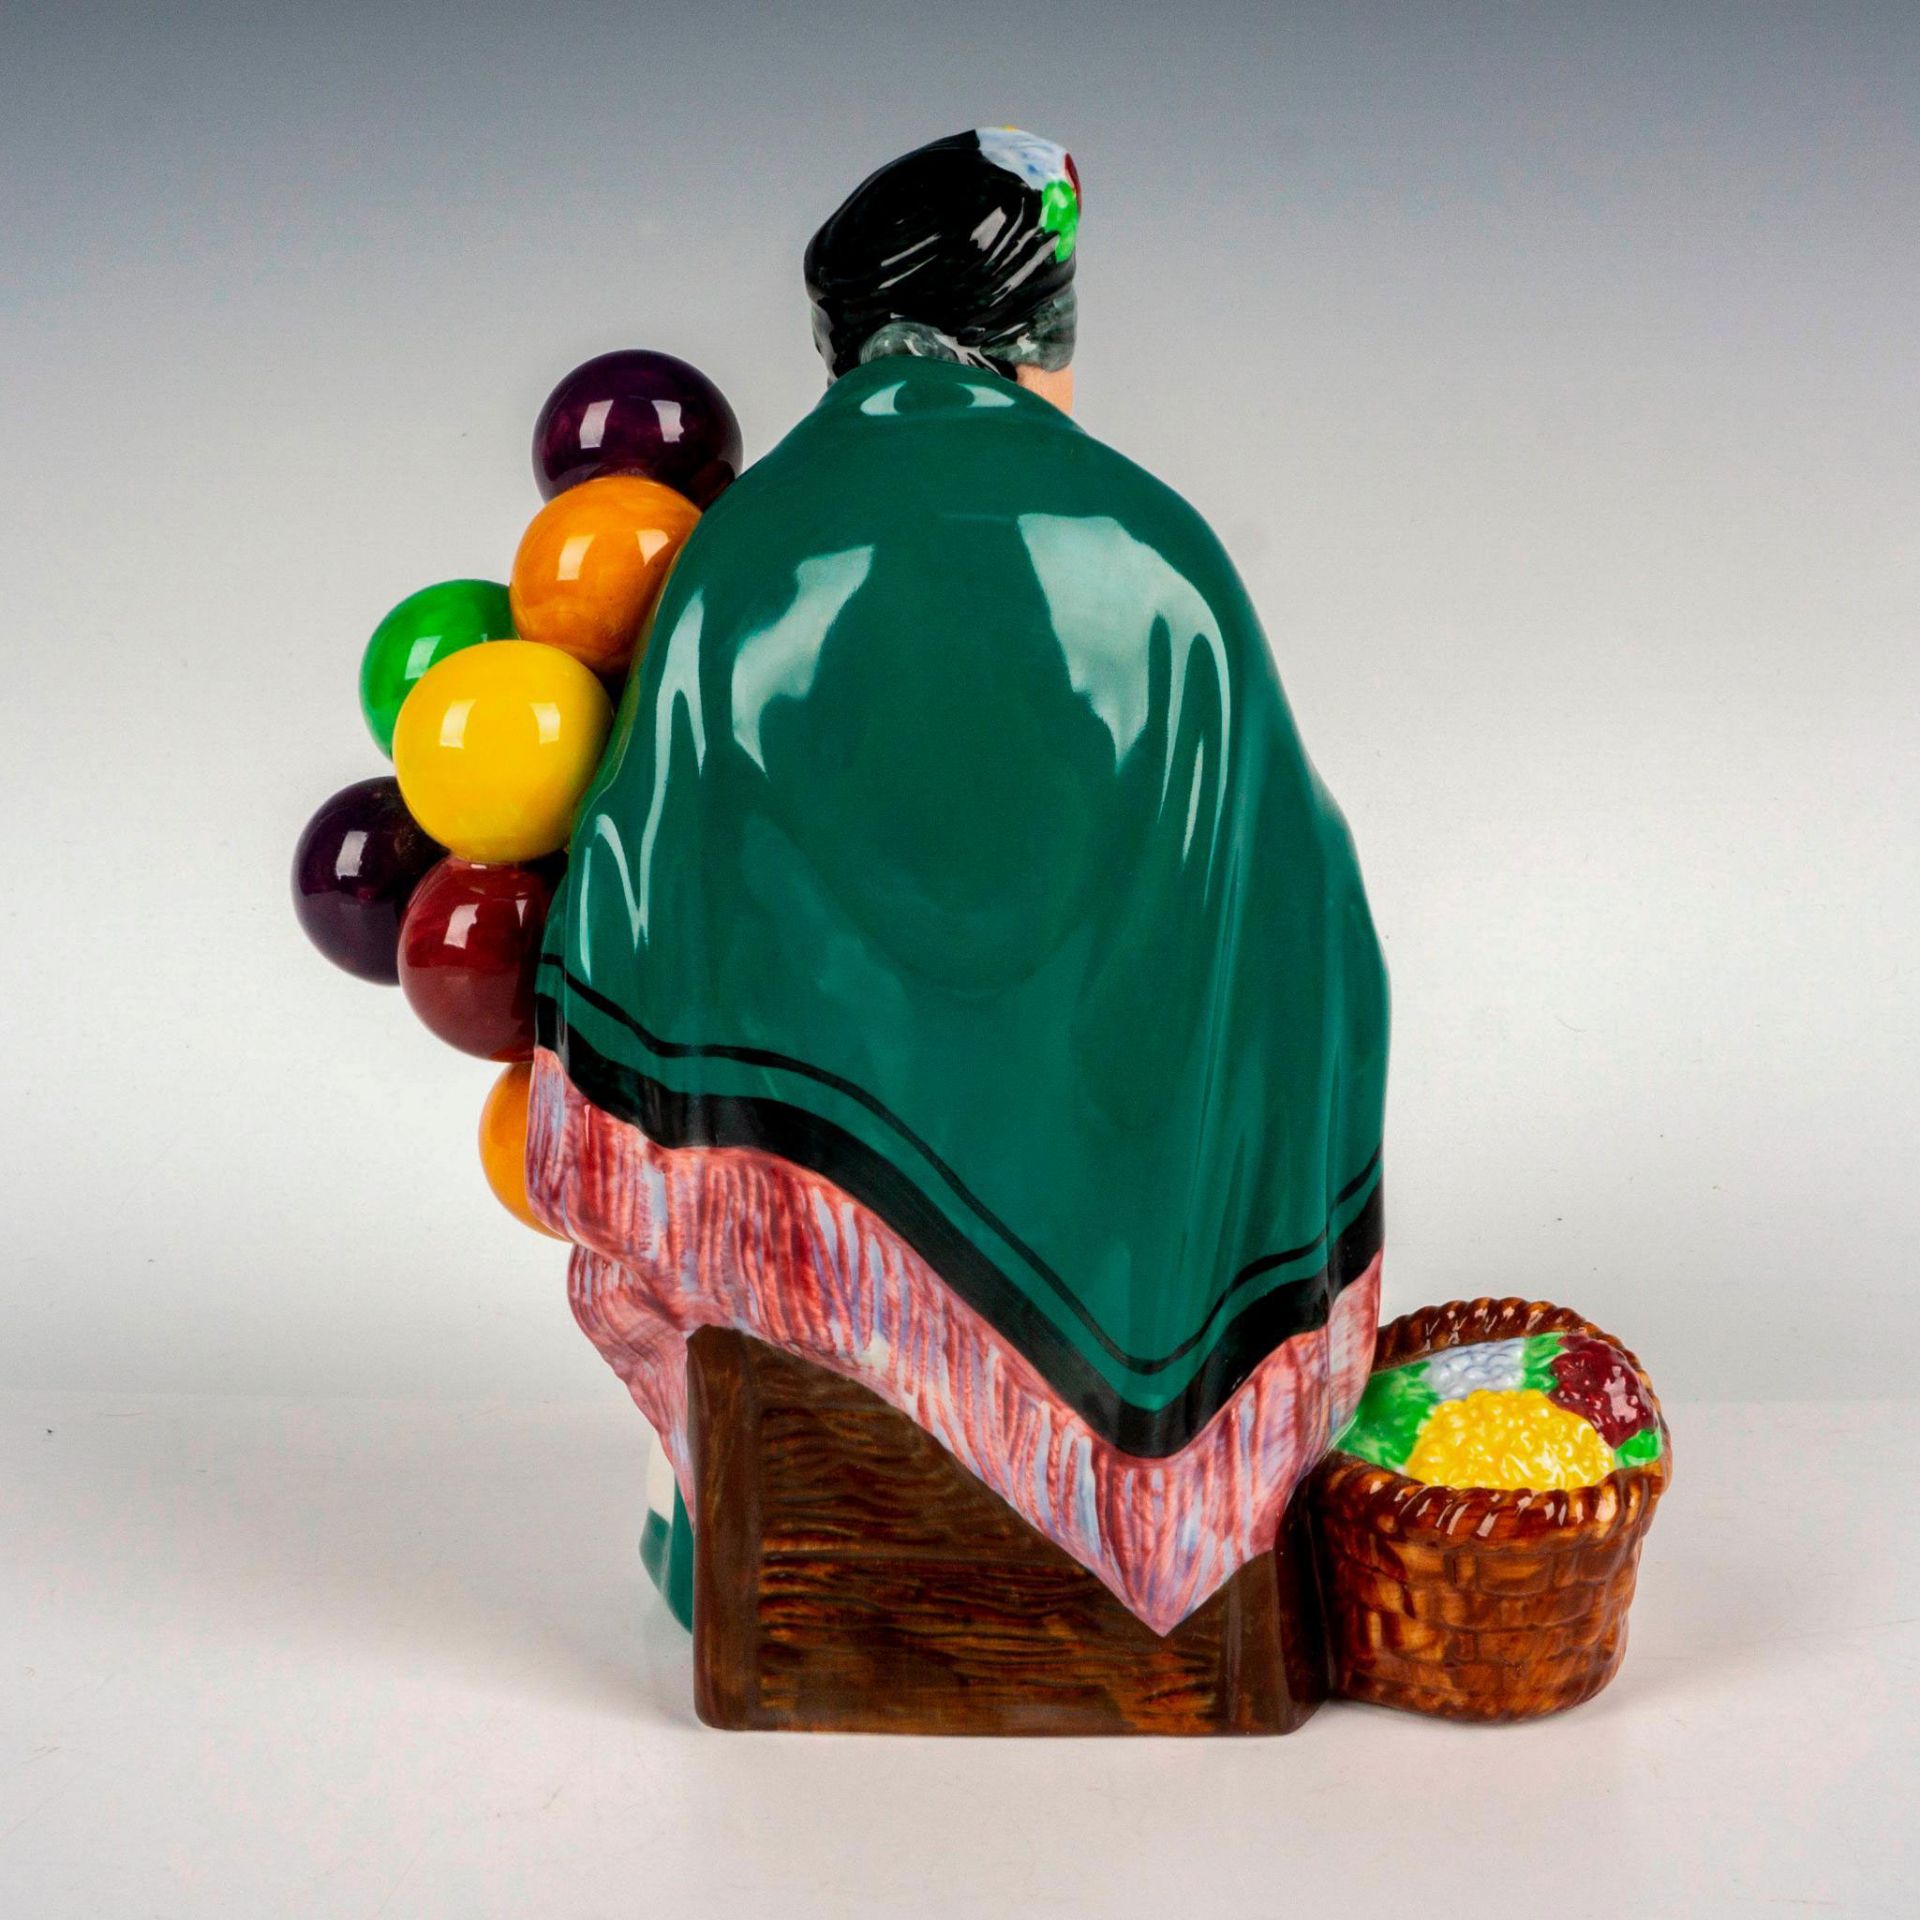 Old Balloon Seller - HN1315 - Royal Doulton Figurine - Image 2 of 3